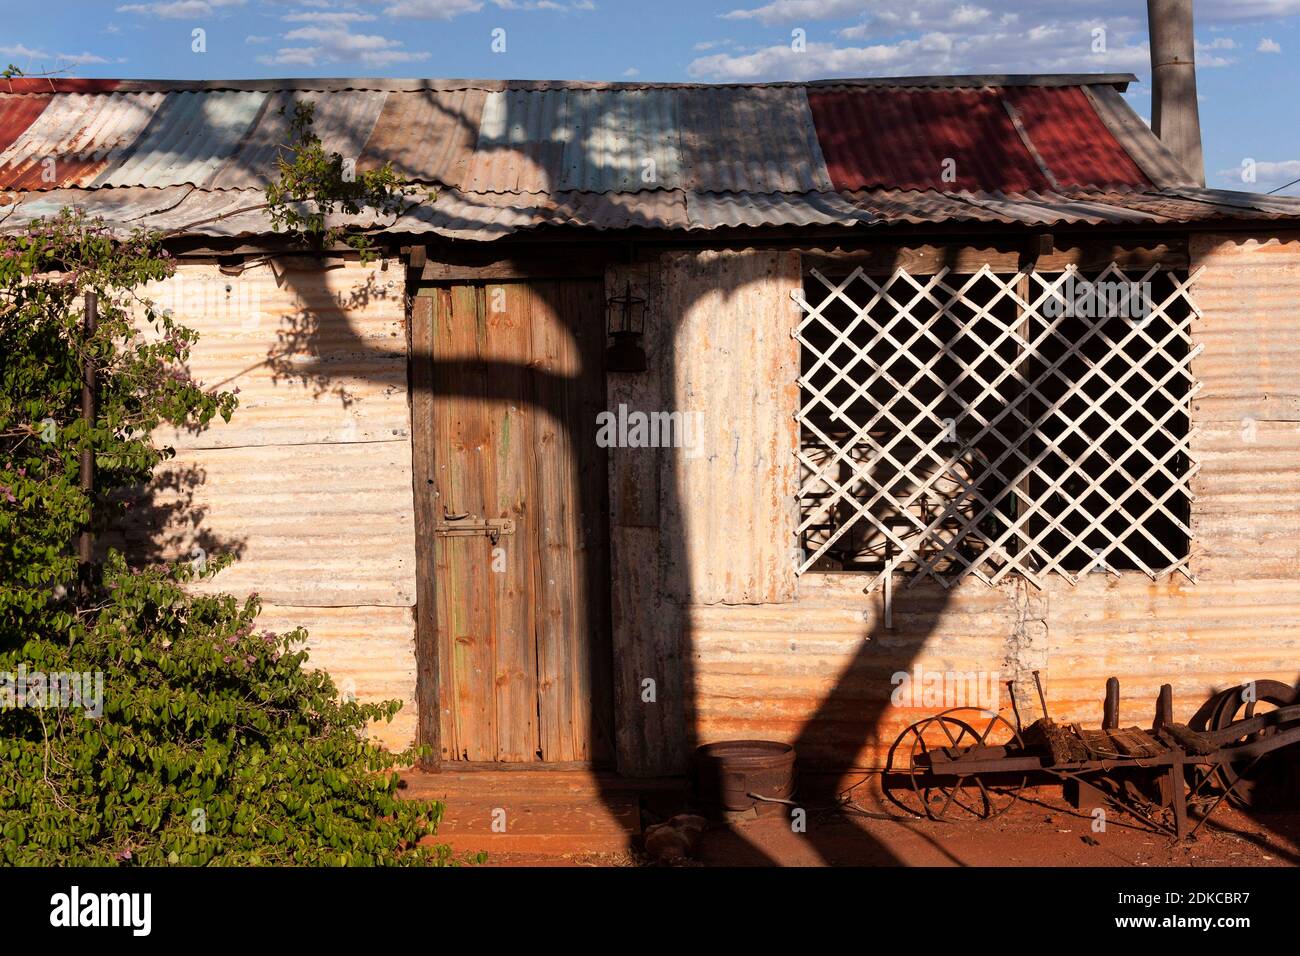 Corrugated iron houses of  the historical gold mining town Gwalia, Leonora, Western Australia Stock Photo